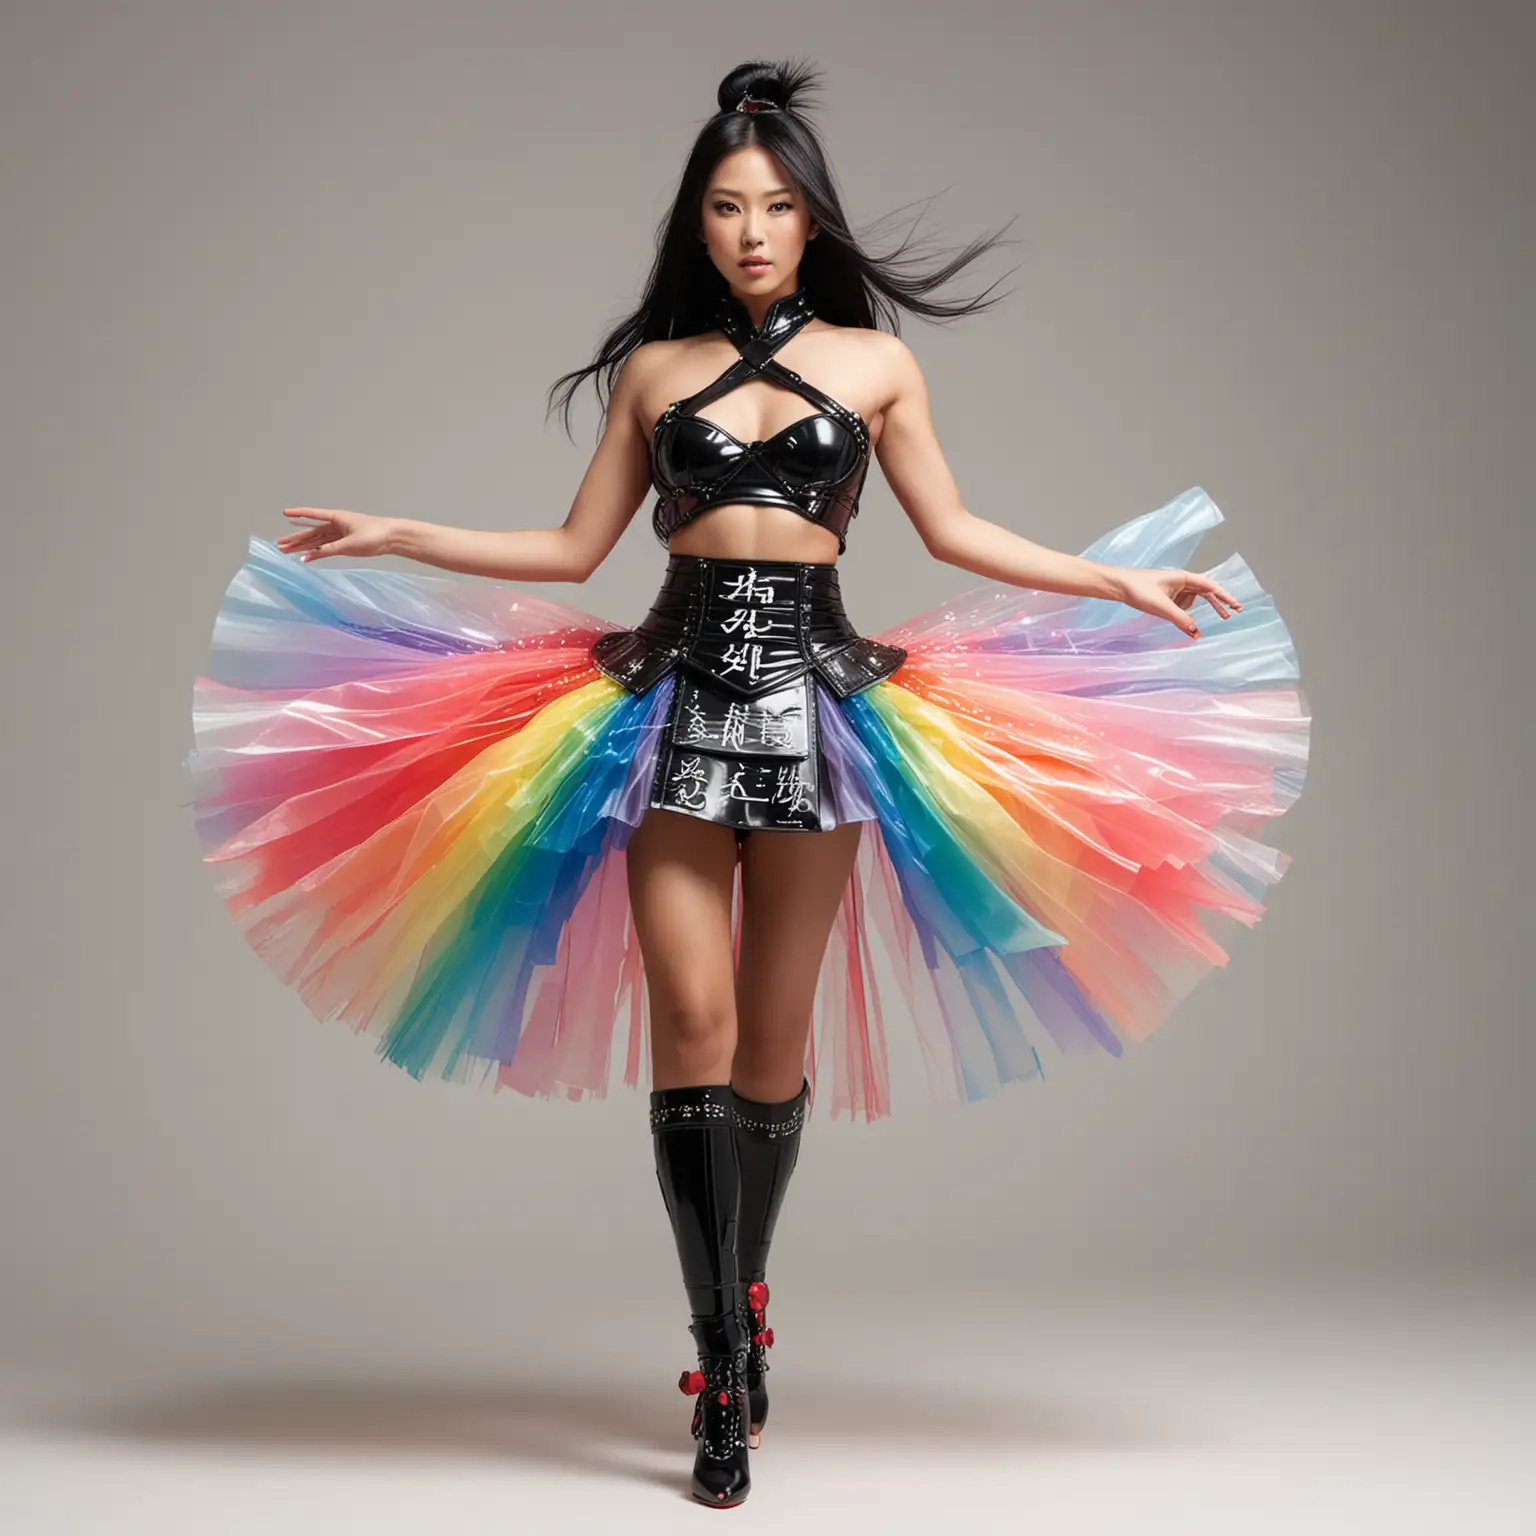 Japanese Supermodel in Futuristic SamuraiKnight Armor and Rainbow Ballerina Tutu